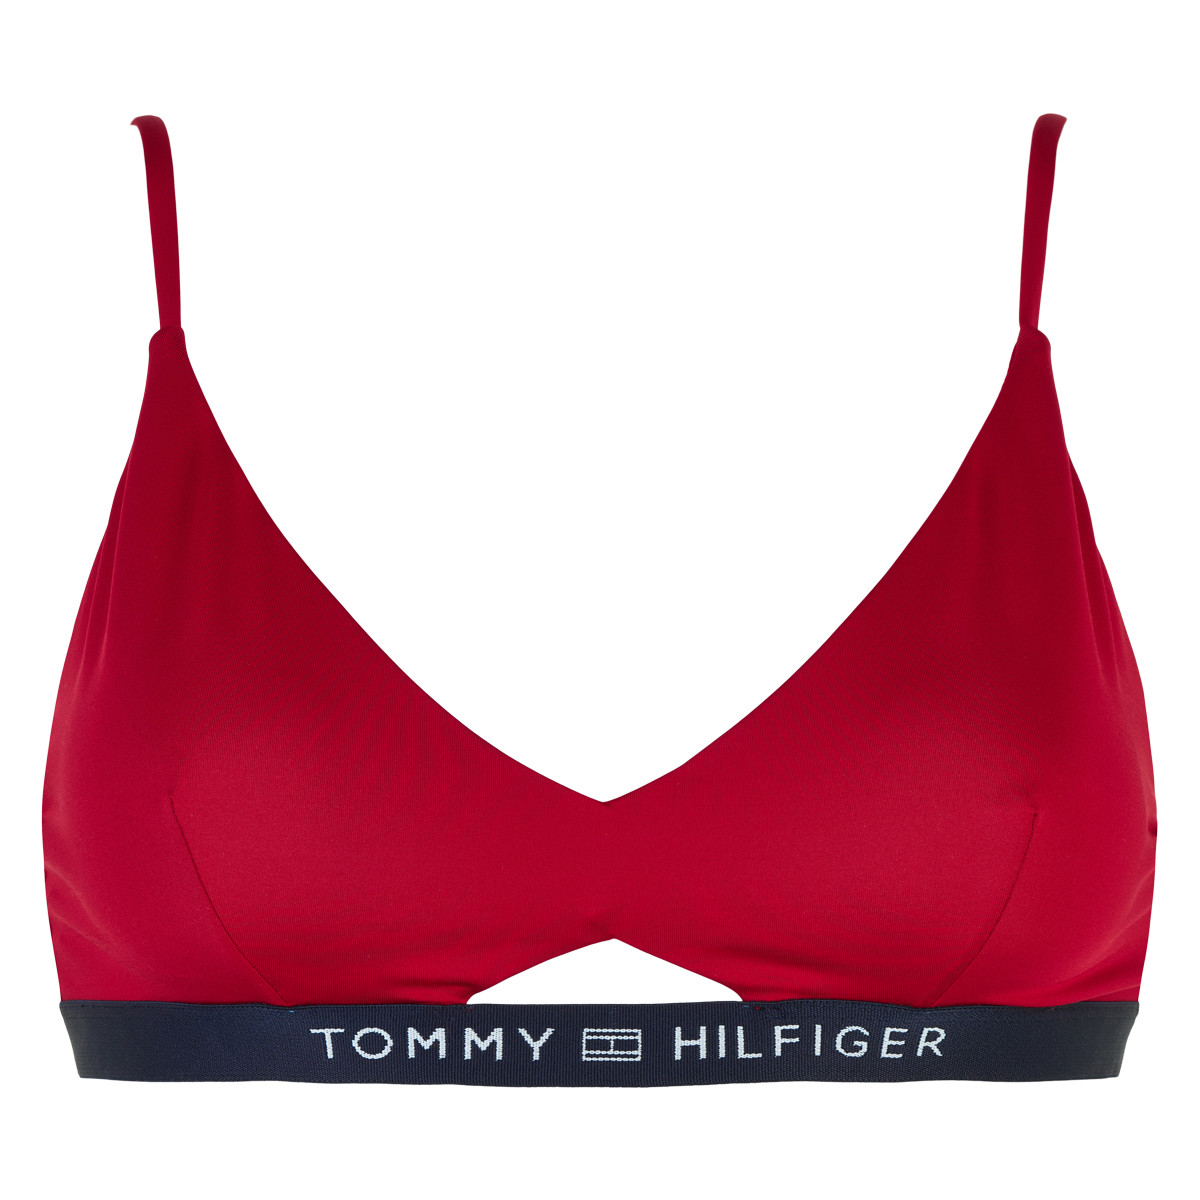 TOMMY HILFIGER LINGERI BIKINI TOP W02706 XLG (Primary Red, XS)